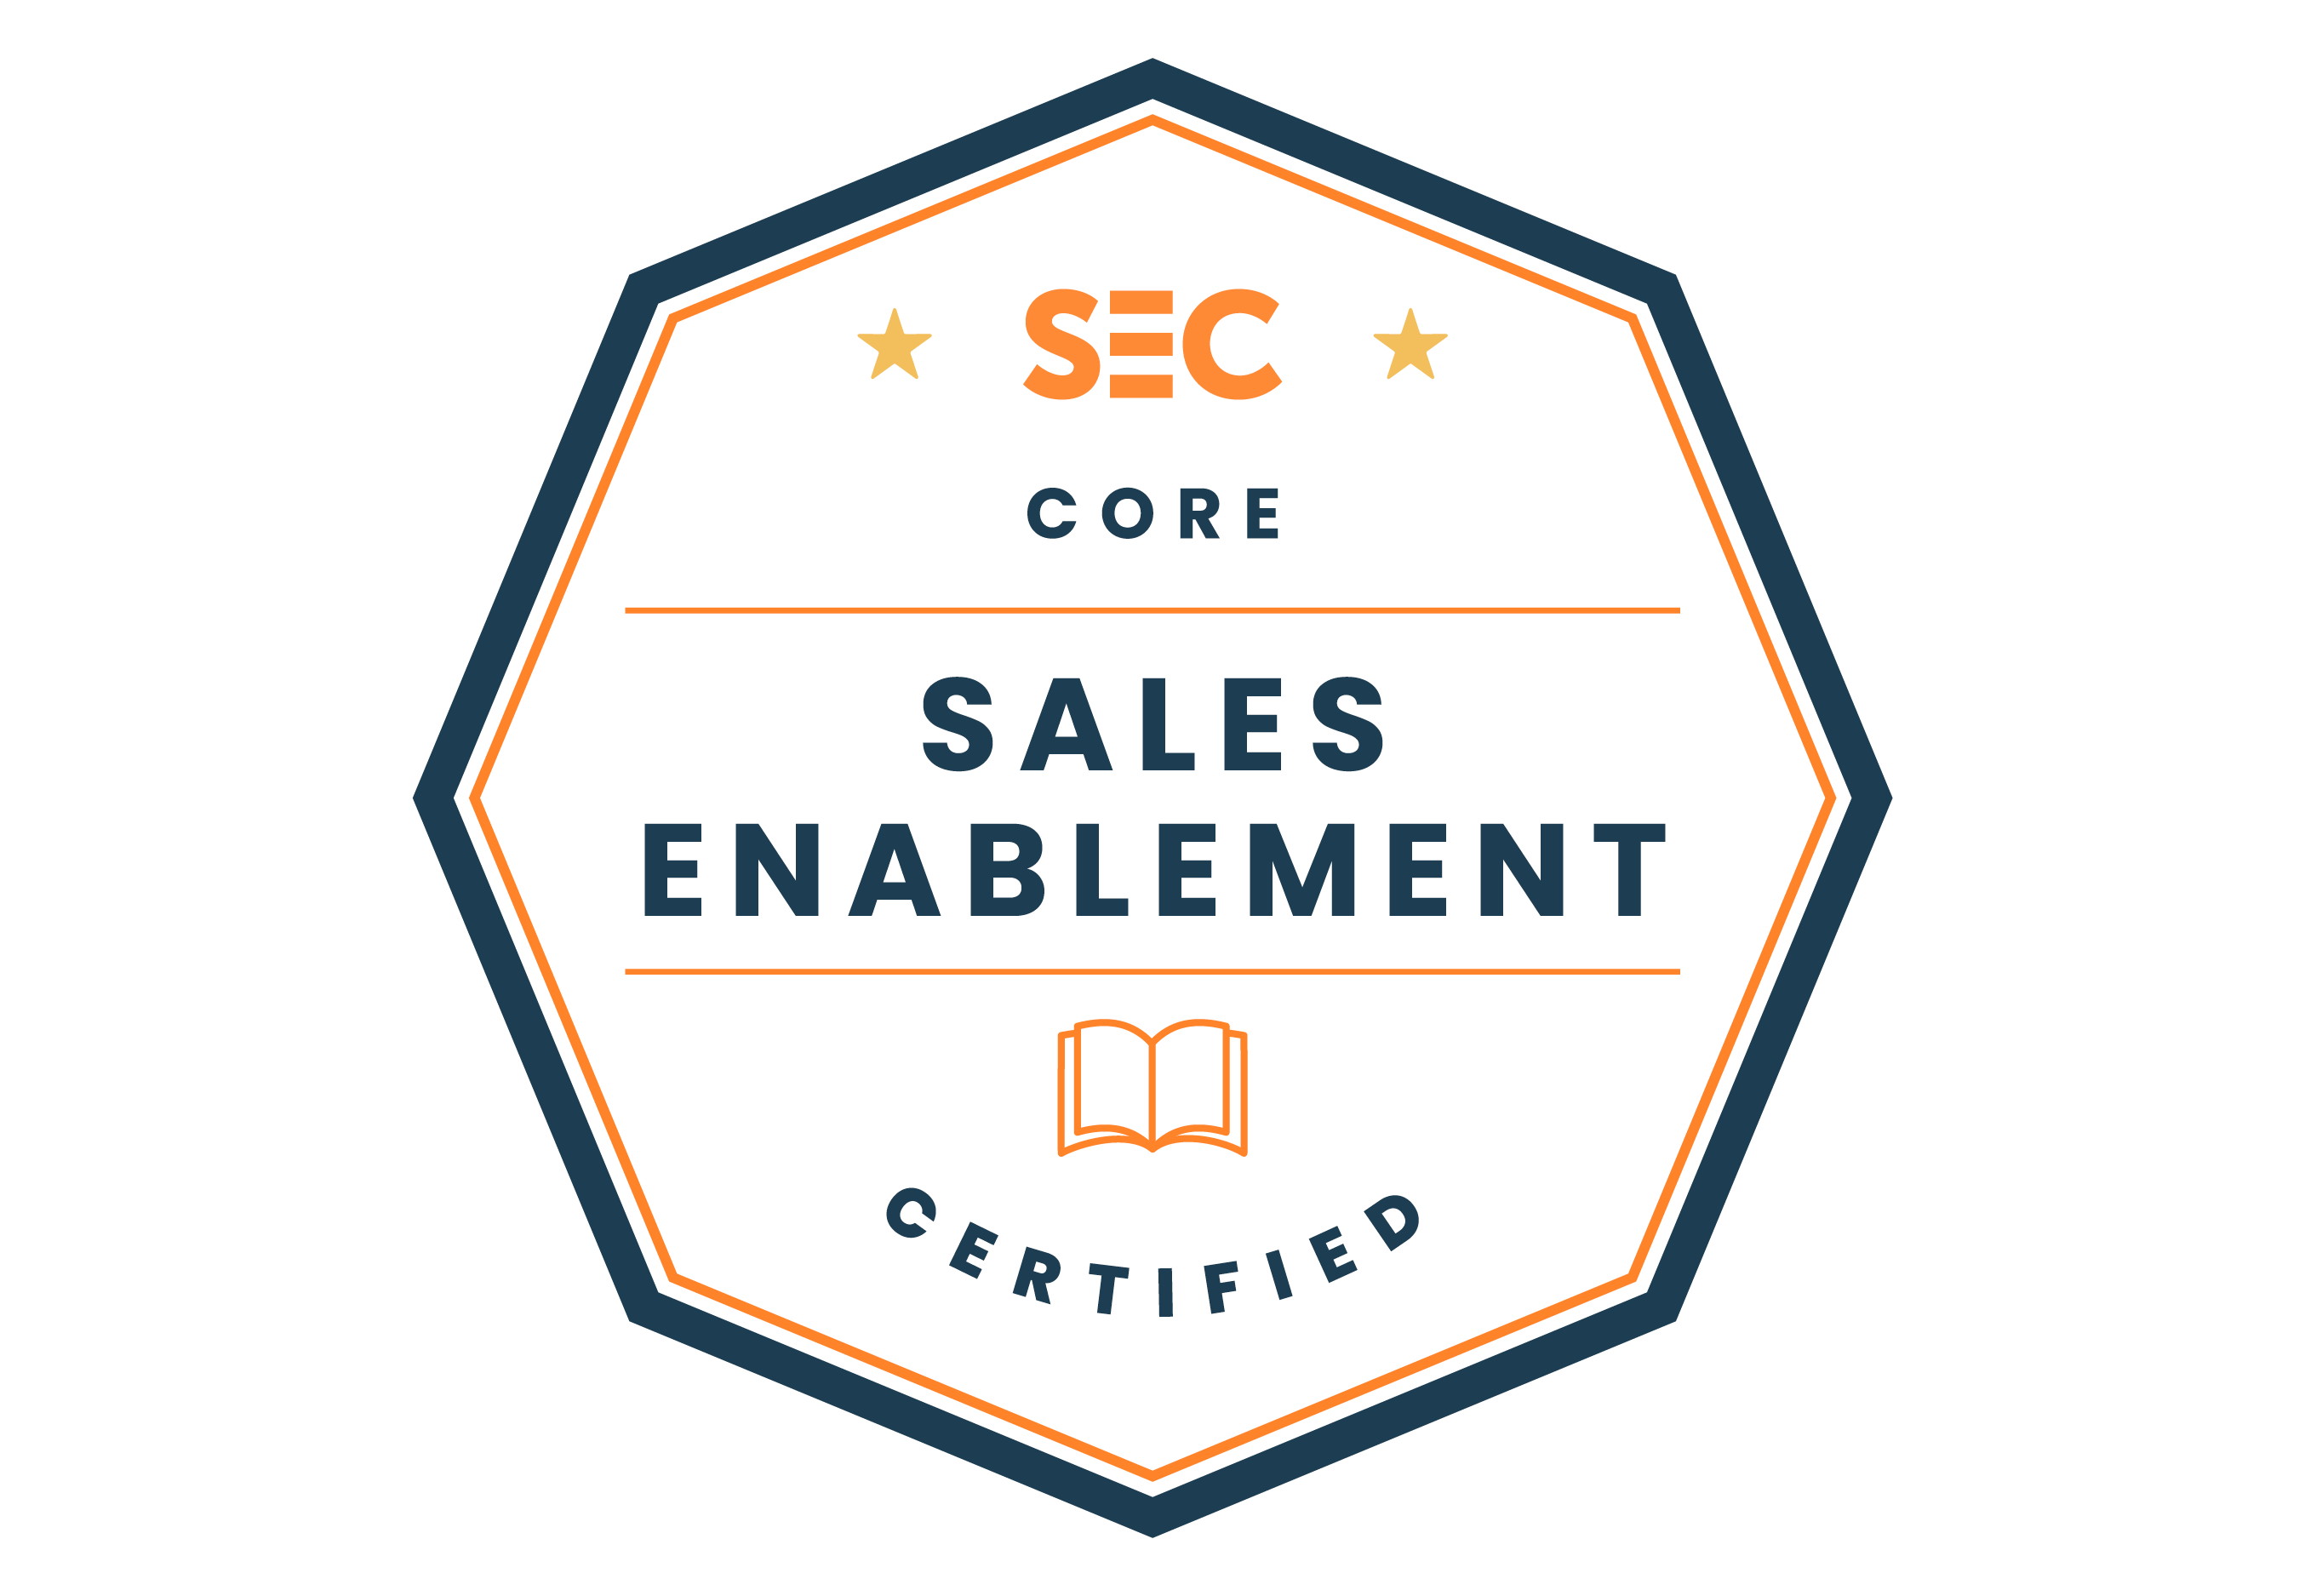 Sales Enablement Certified: Core badge